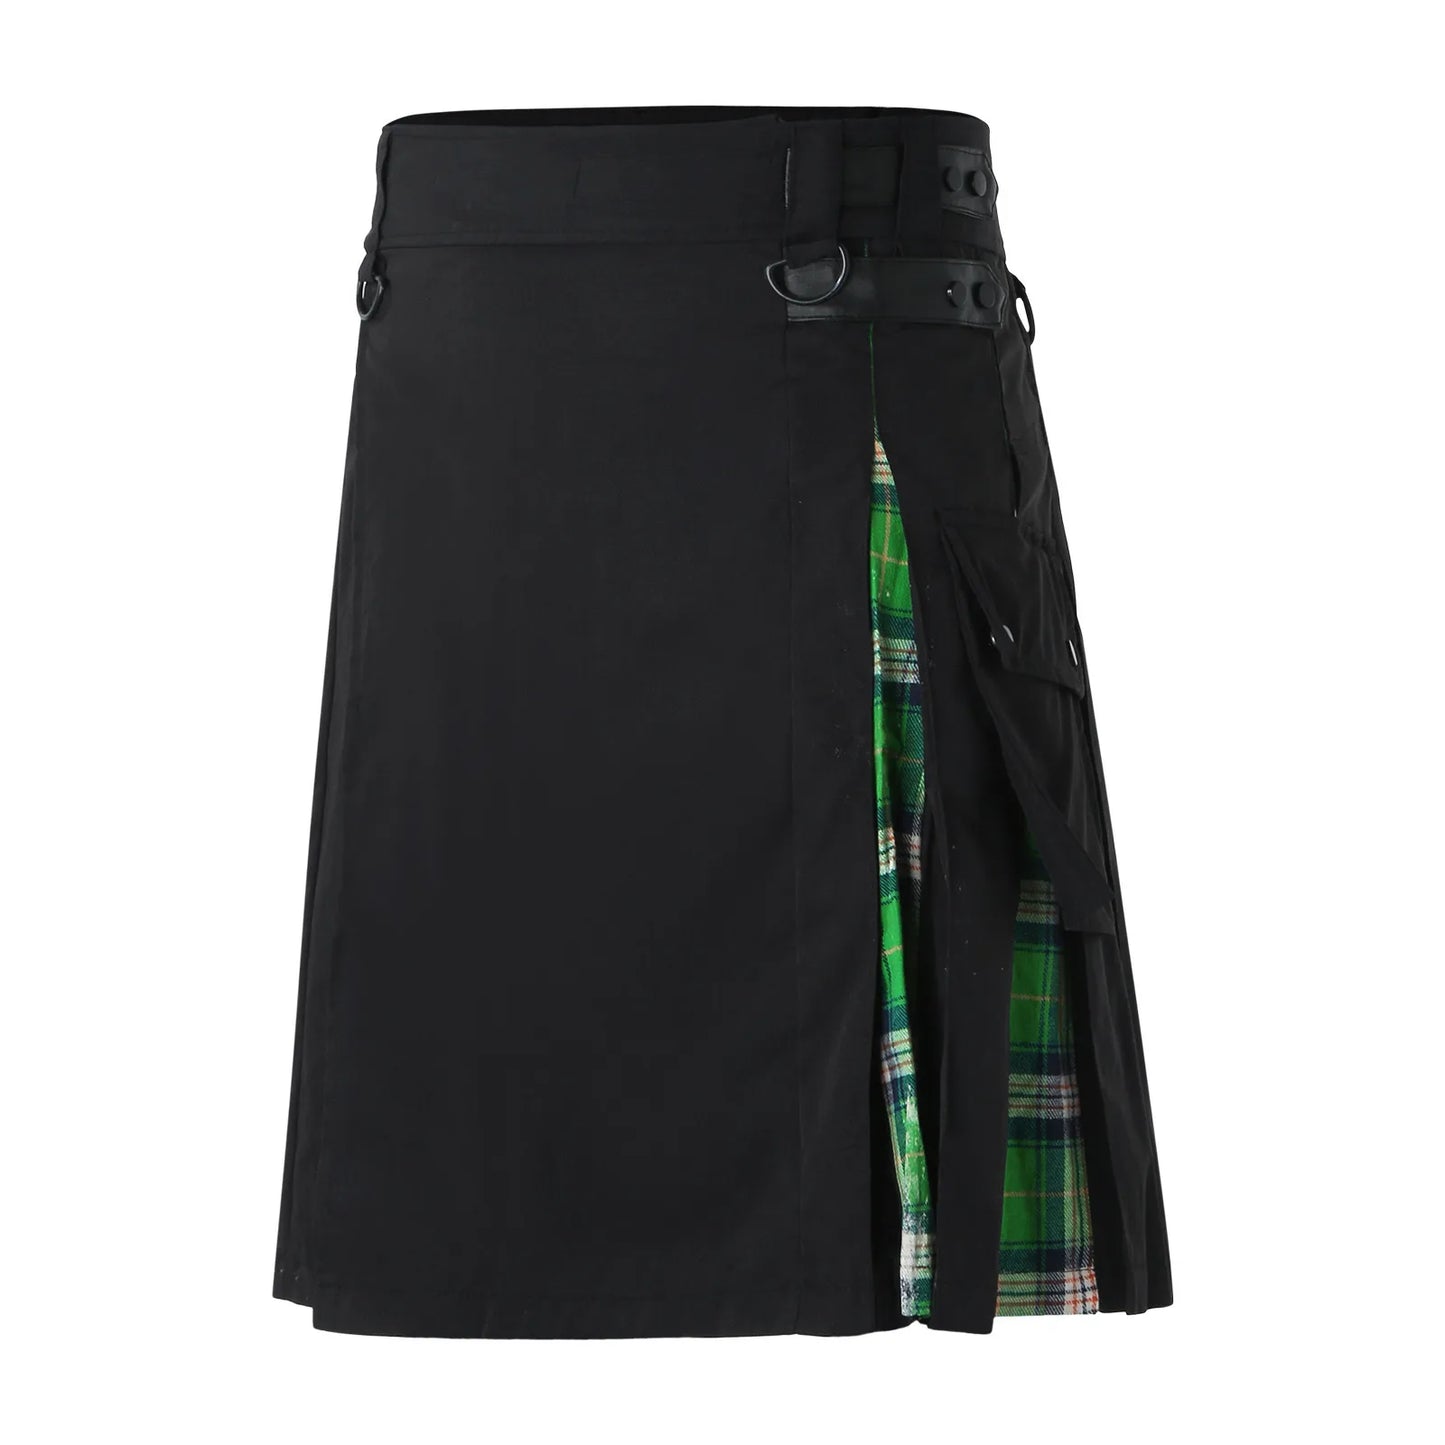 JuliaFashion - Scottish Mens Kilt Fashion Casual Retro Scottish Style Pocket Pleated Skirt Traditional Personality Kilts Check Pattern Skirts Dress